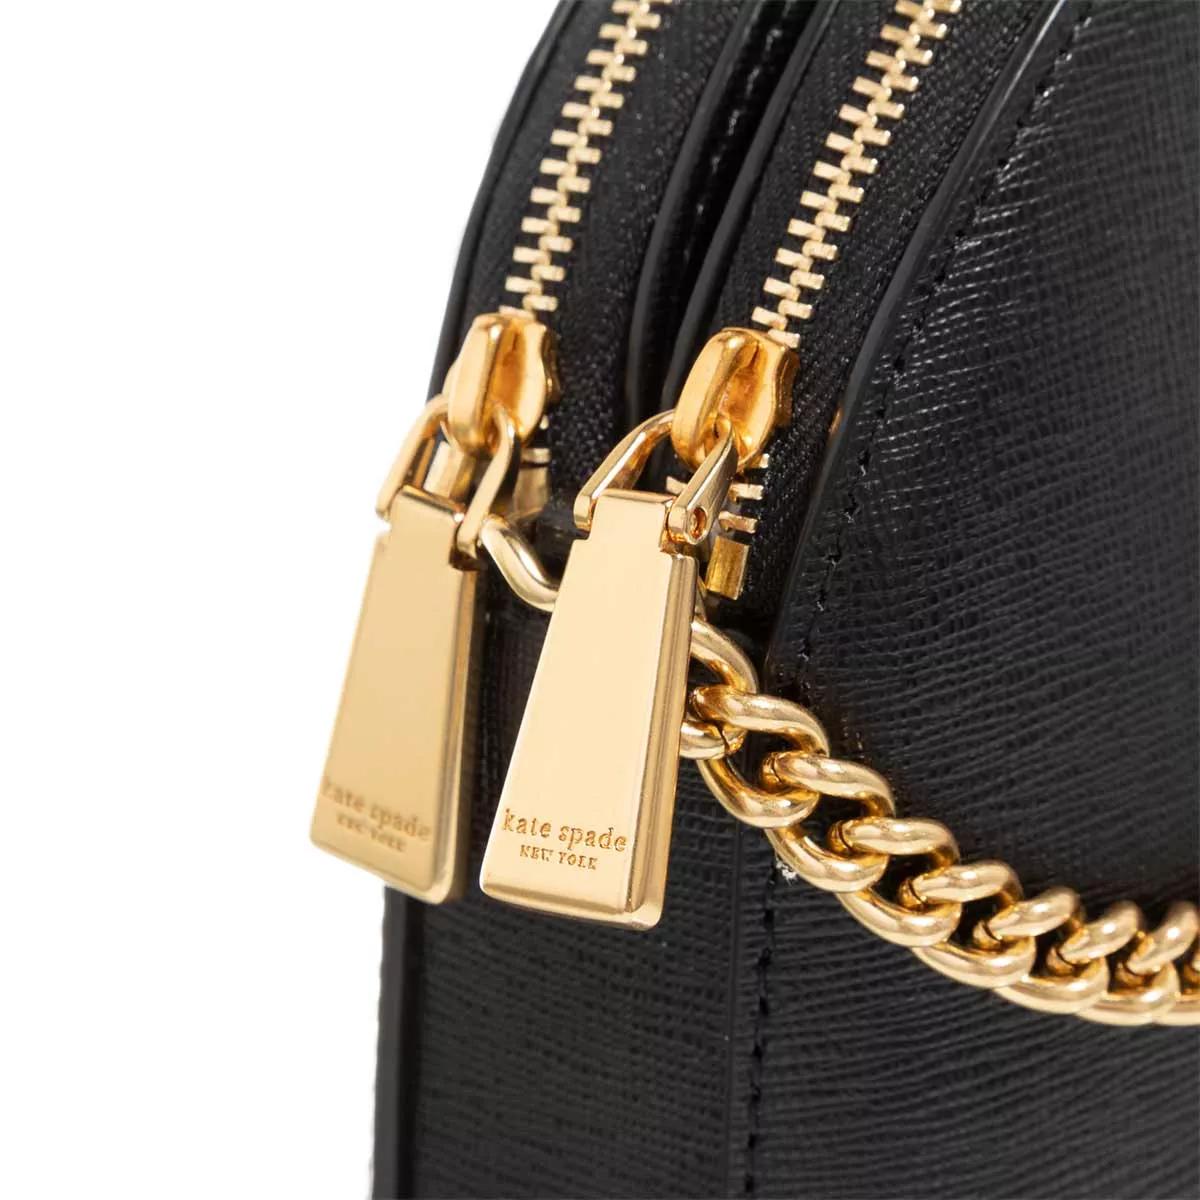 Buy Kate Spade New York Black Morgan Saffiano Leather Dome Crossbody Bag  from Next USA